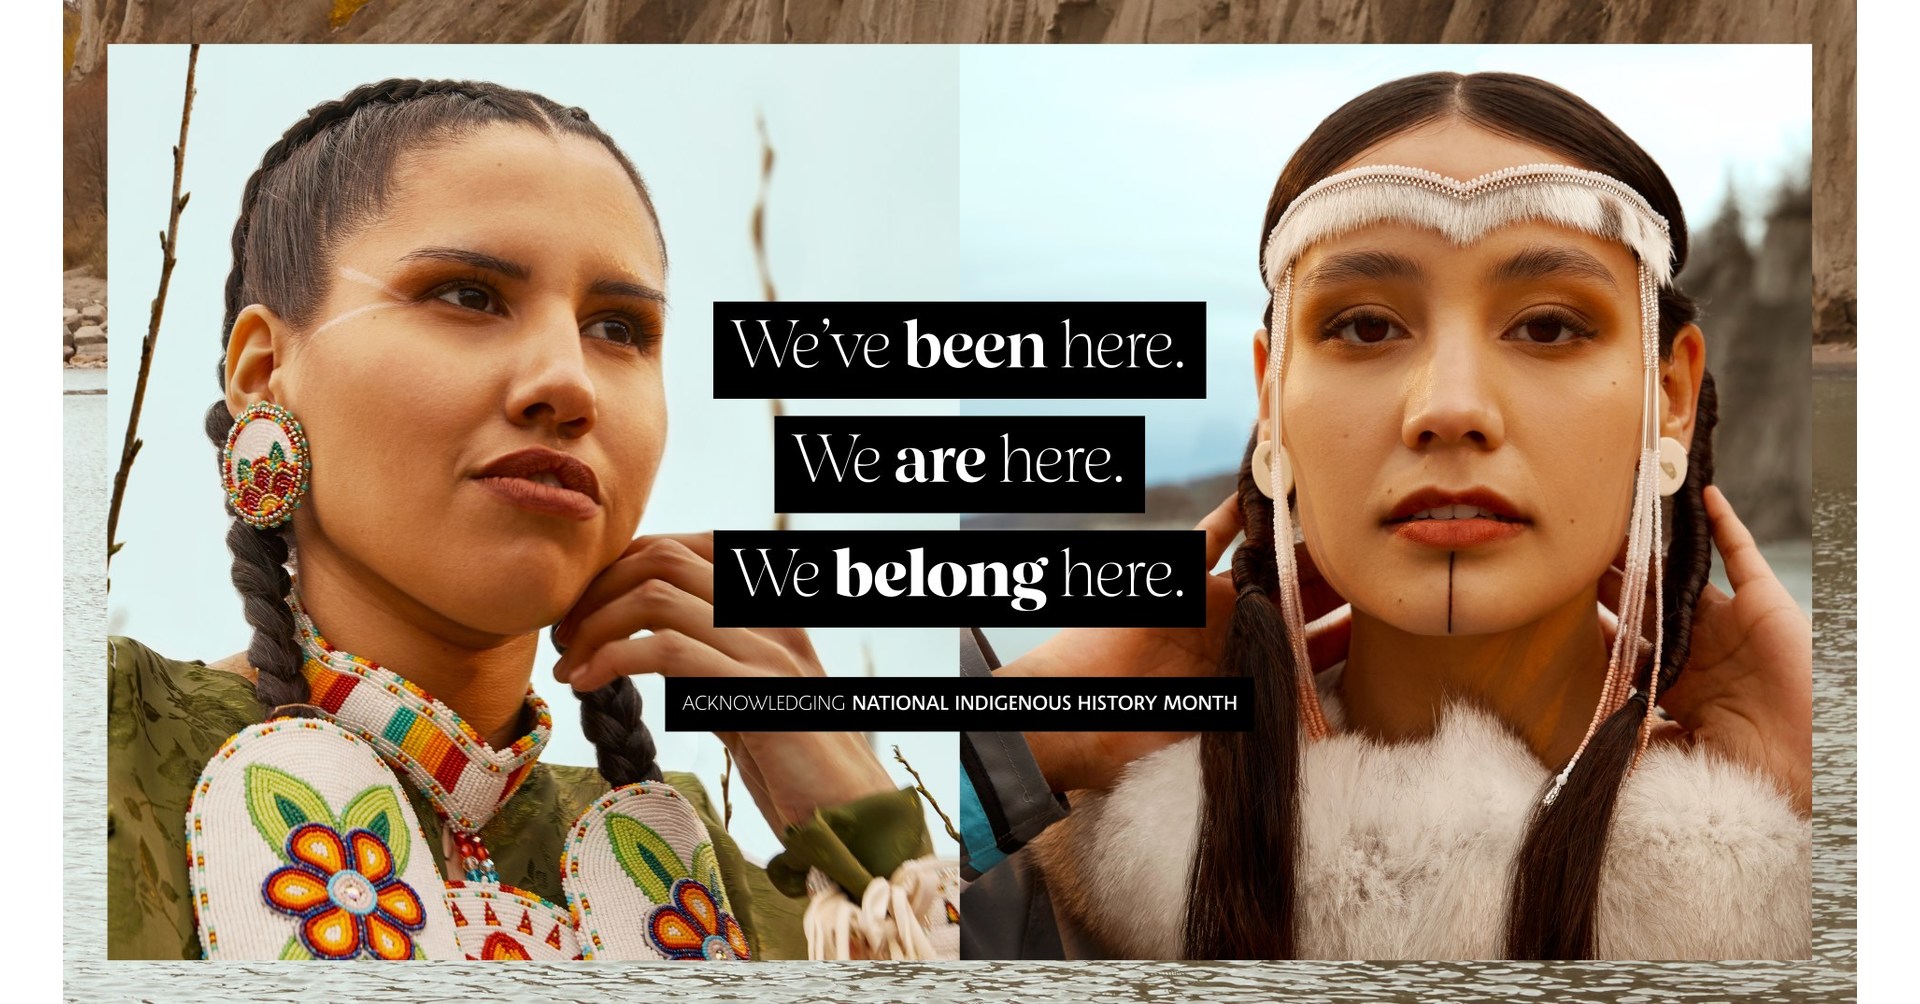 Cheekbone Beauty X Sephora Canada - Indigenous owned beauty brand, Cheekbone  Beauty, launches on Sephora.ca